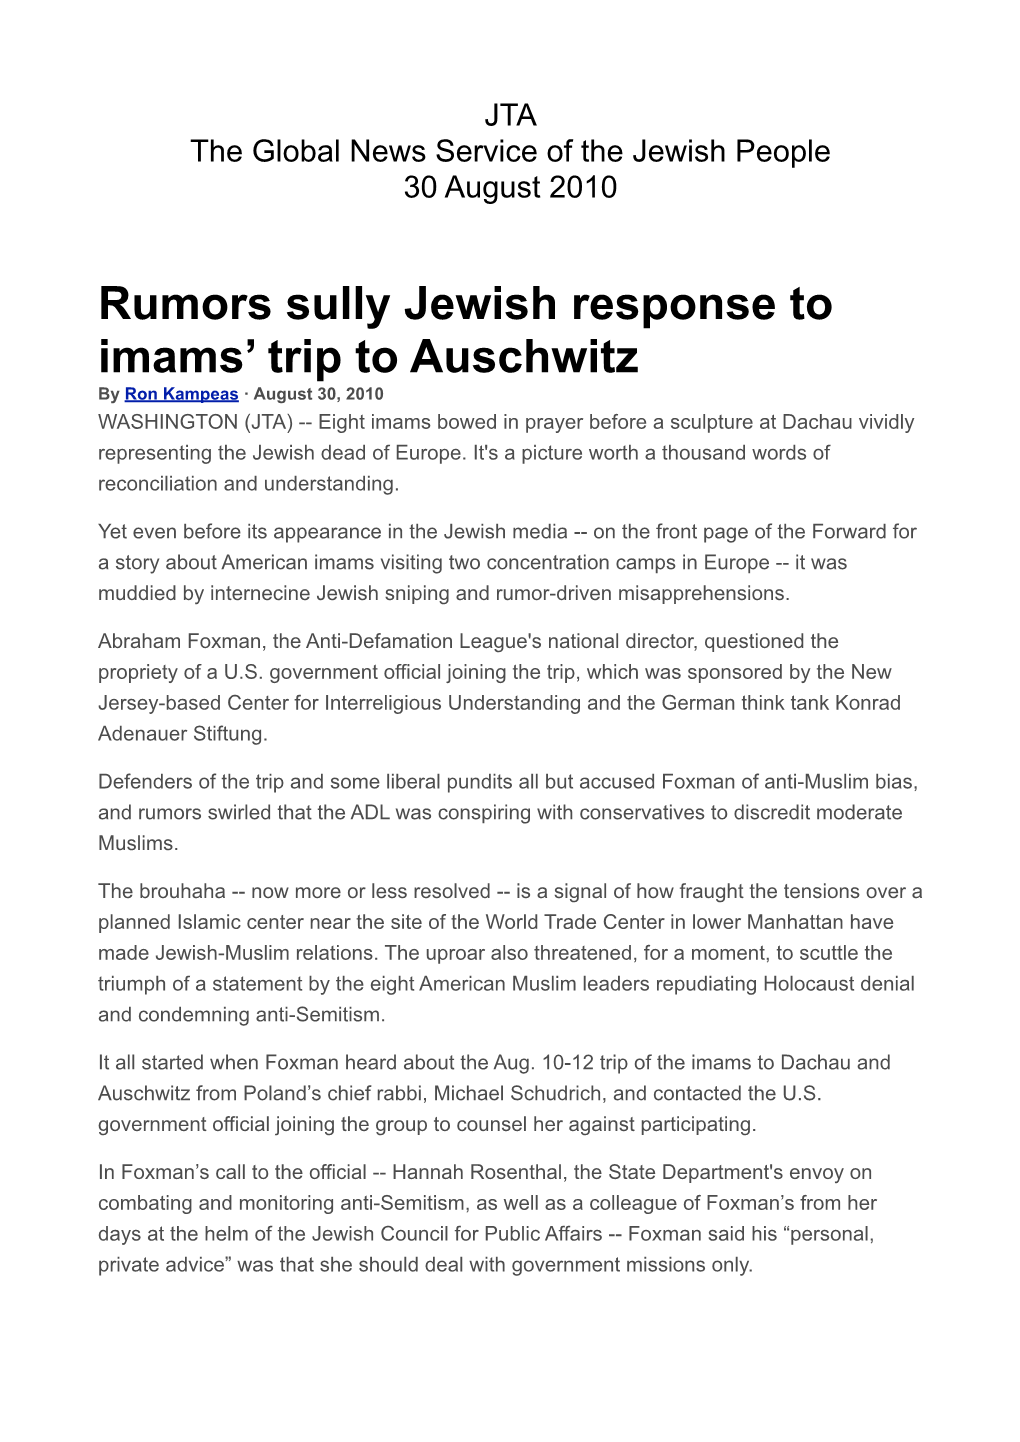 Rumors Sully Jewish Response to Imams' Trip to Auschwitz